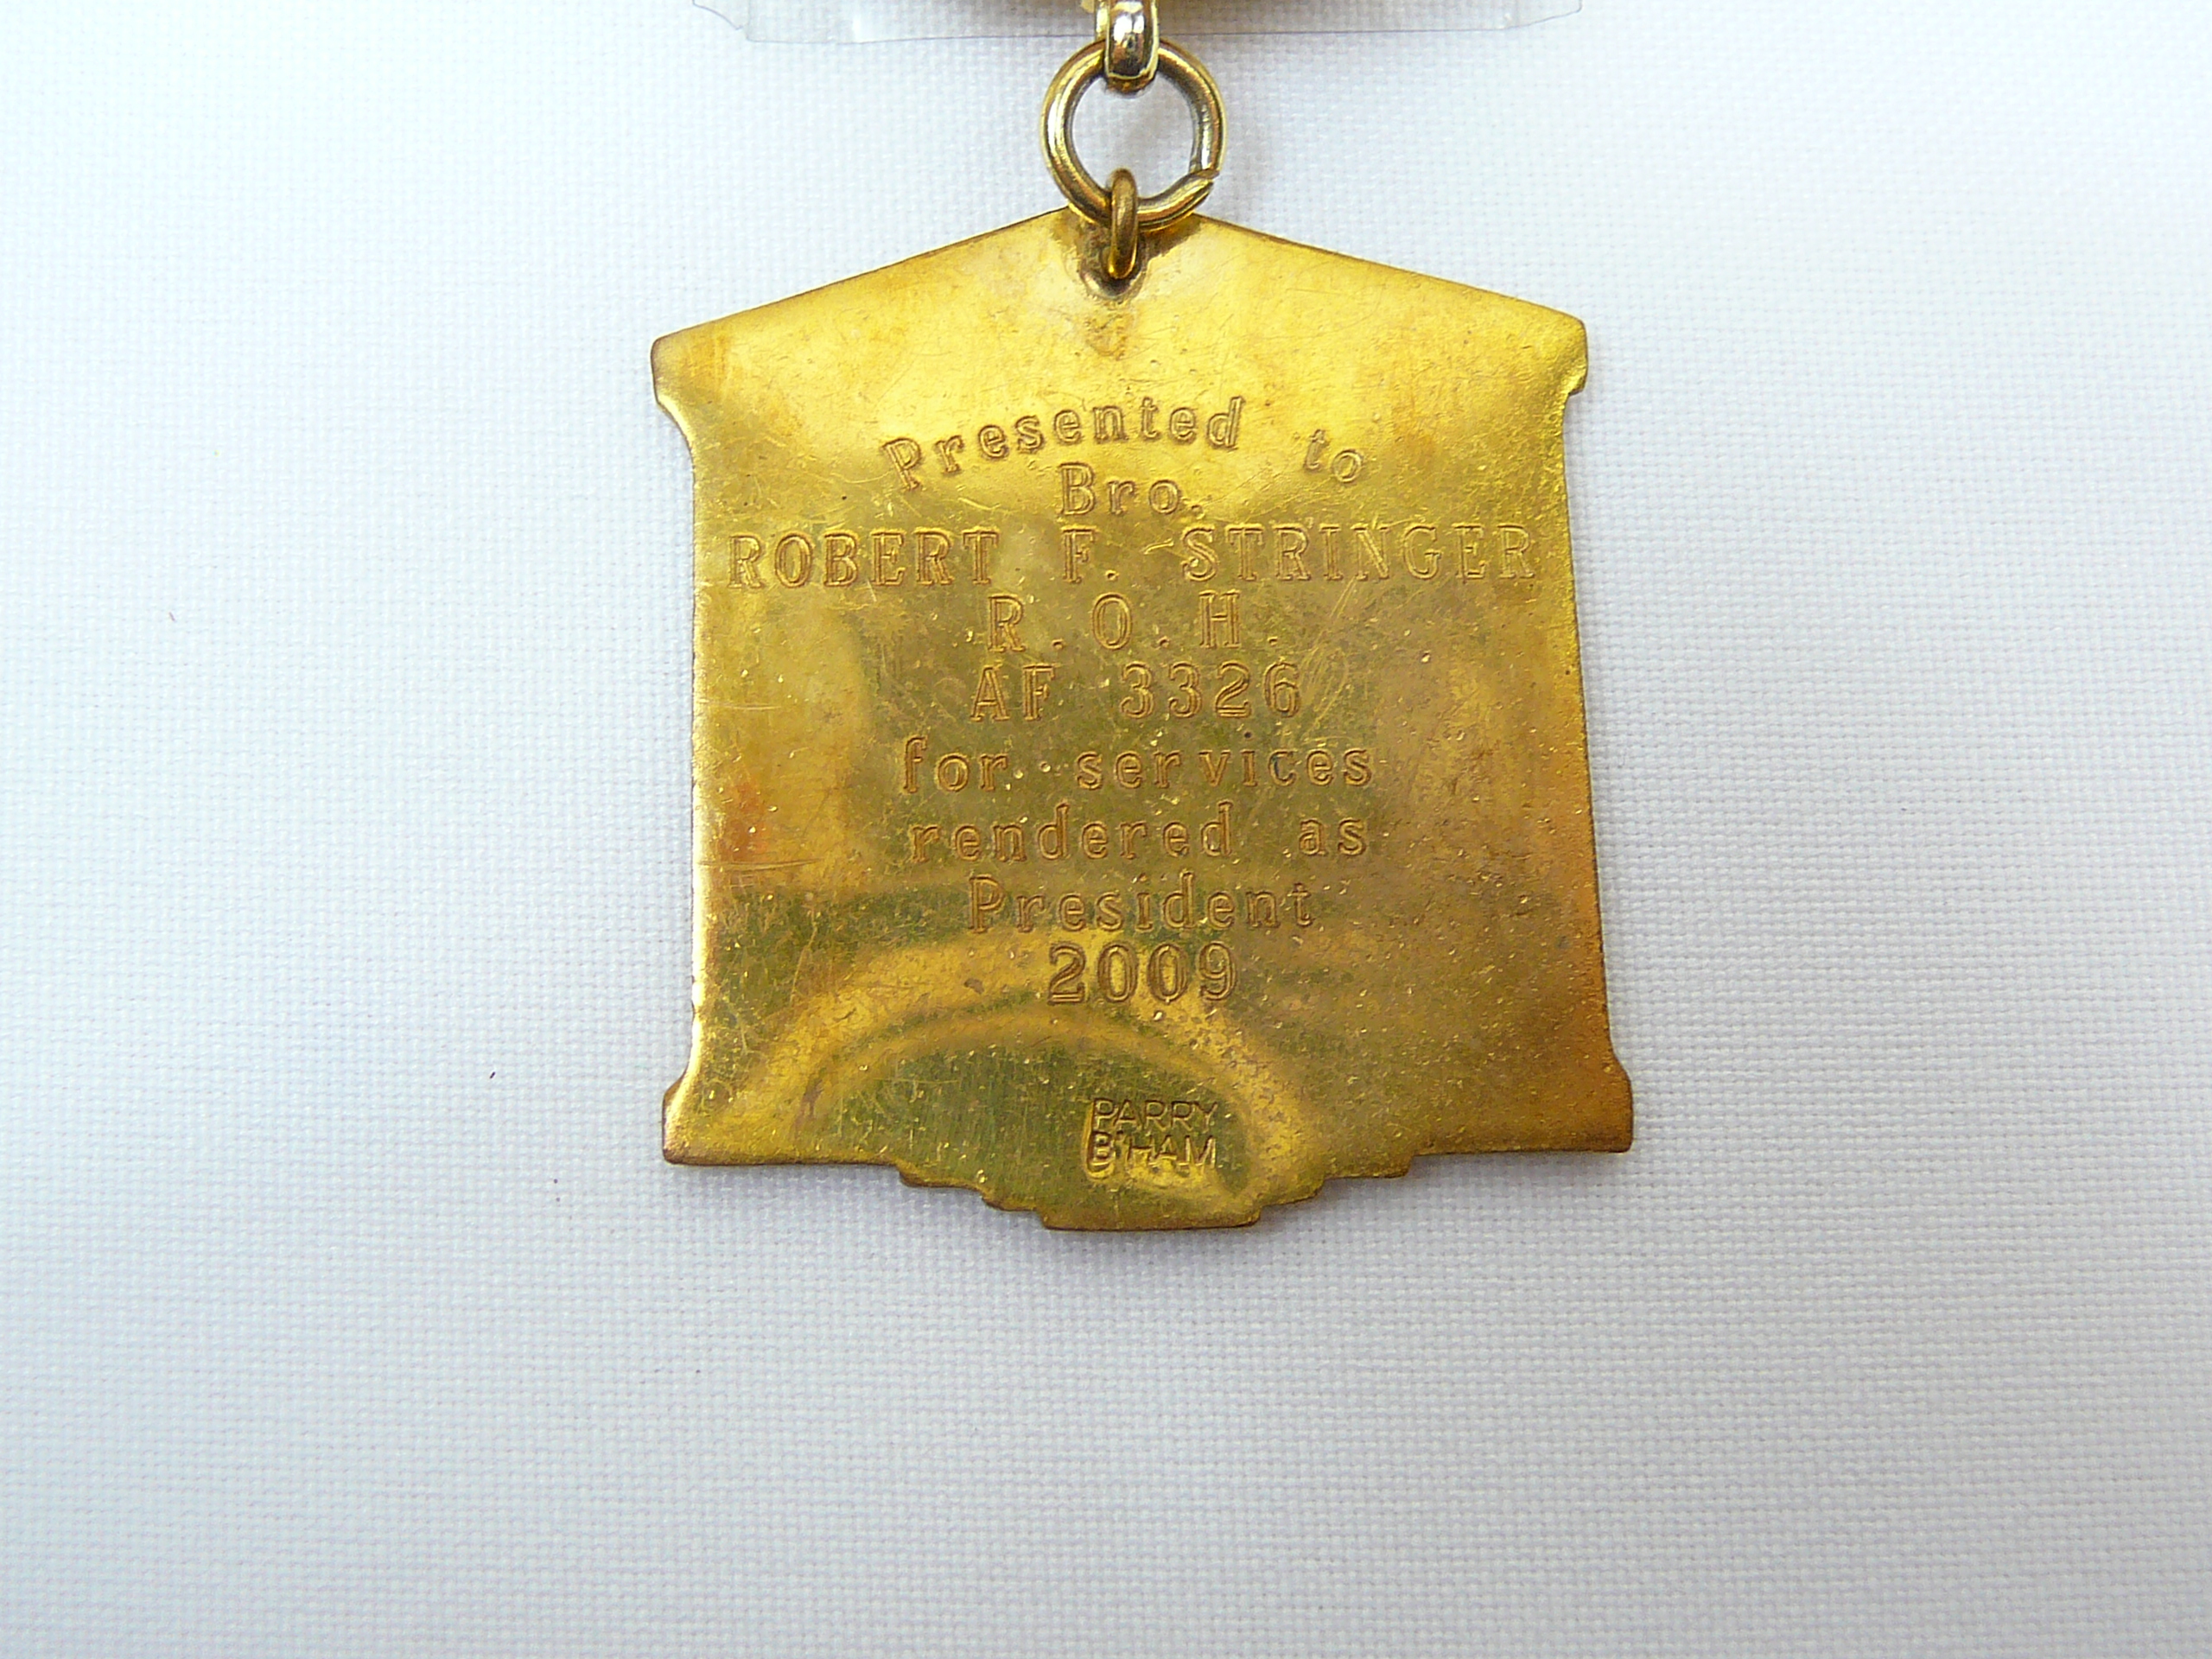 Masonic jewel / medal - Image 4 of 4